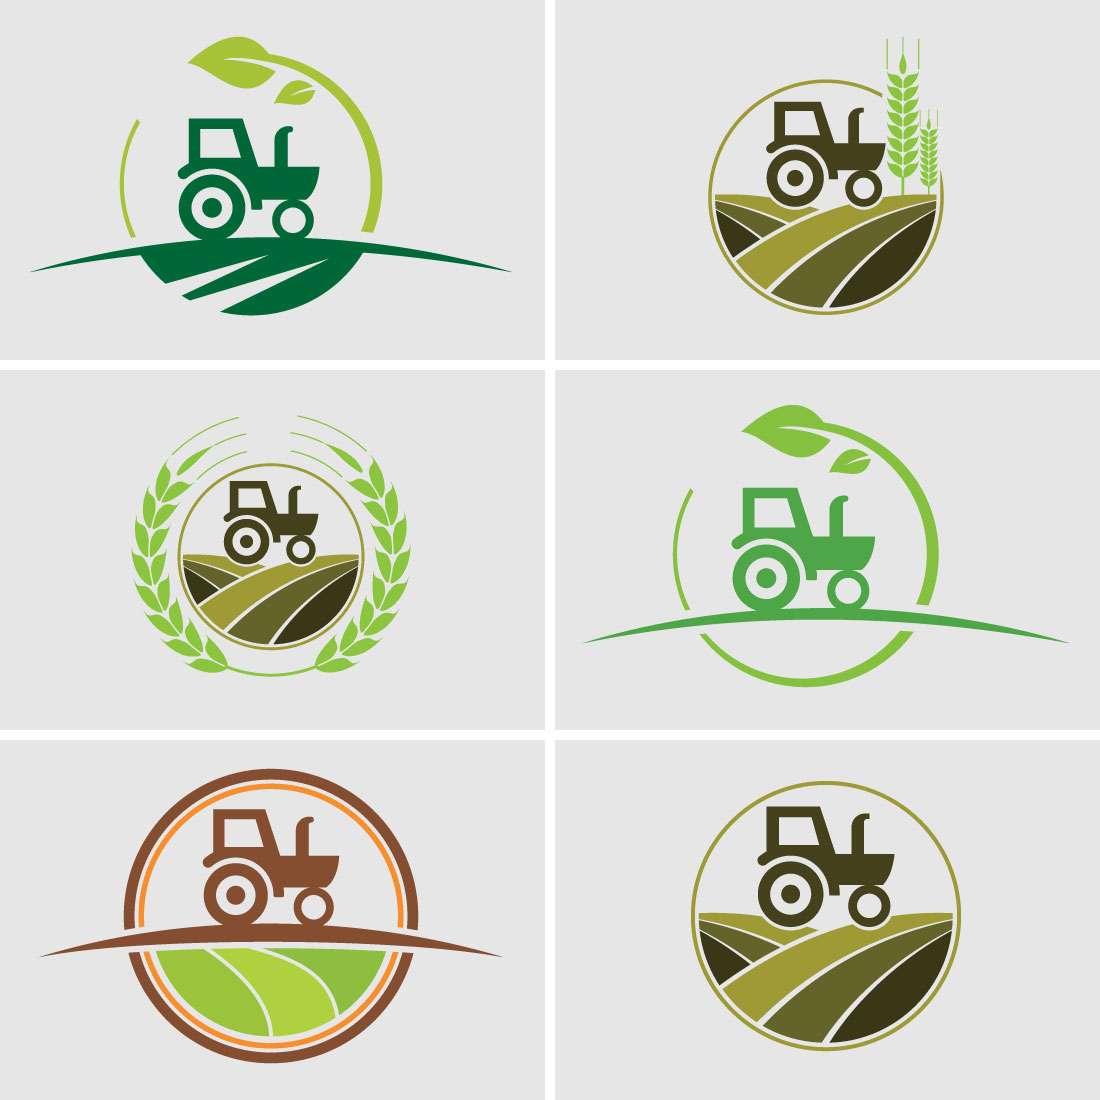 Tractor Logo or Farm Logo Template cover image.